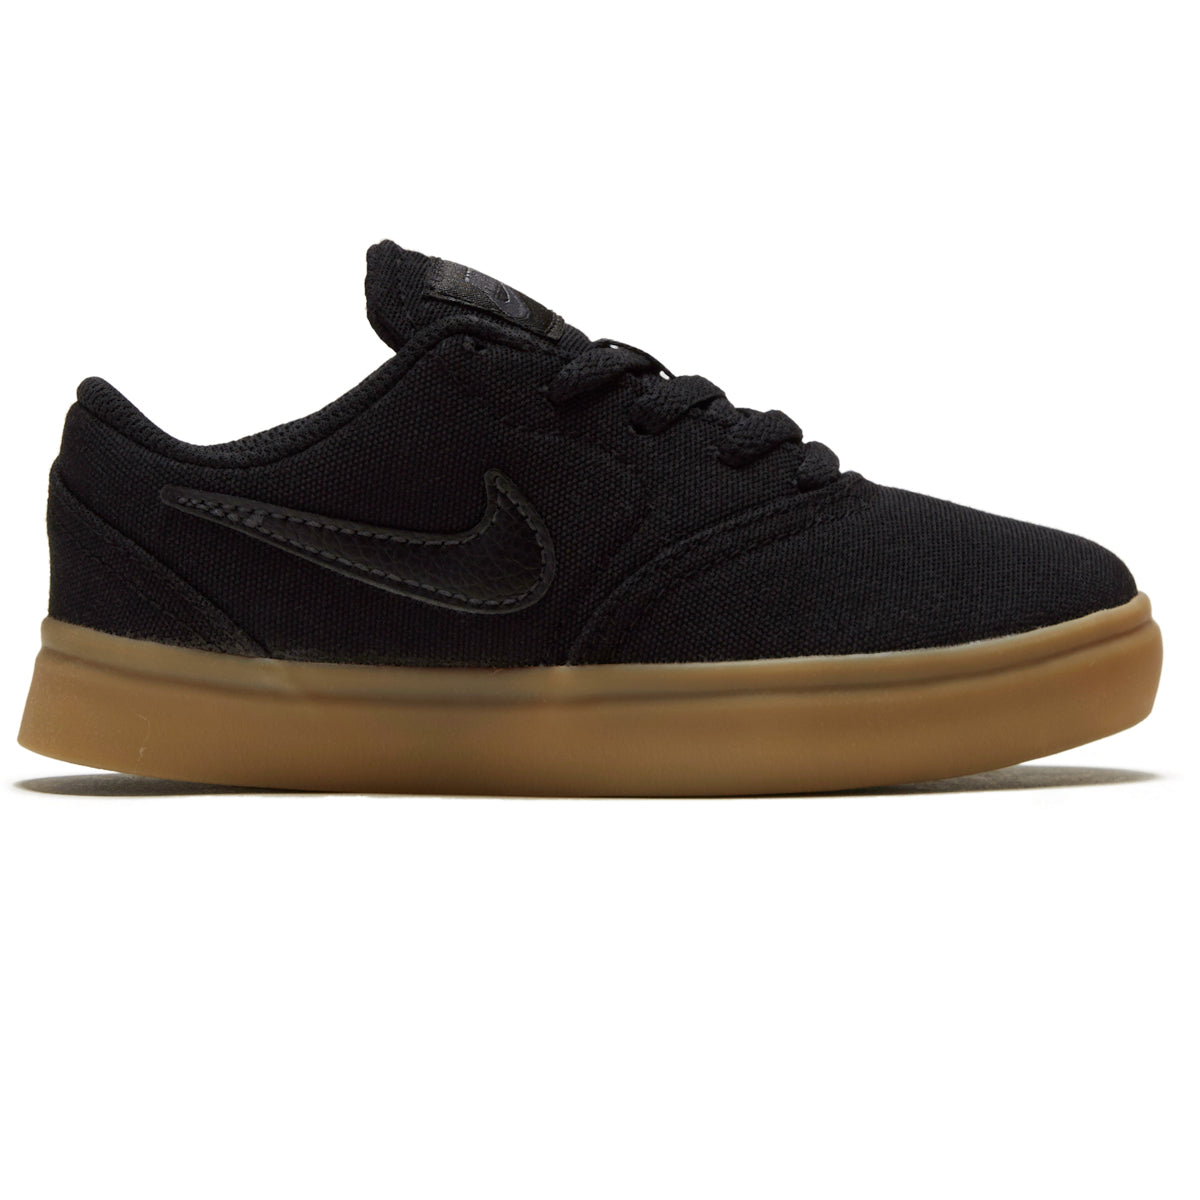 Nike SB Youth Check Canvas Shoes - Black/Black/Gum Light Brown image 1